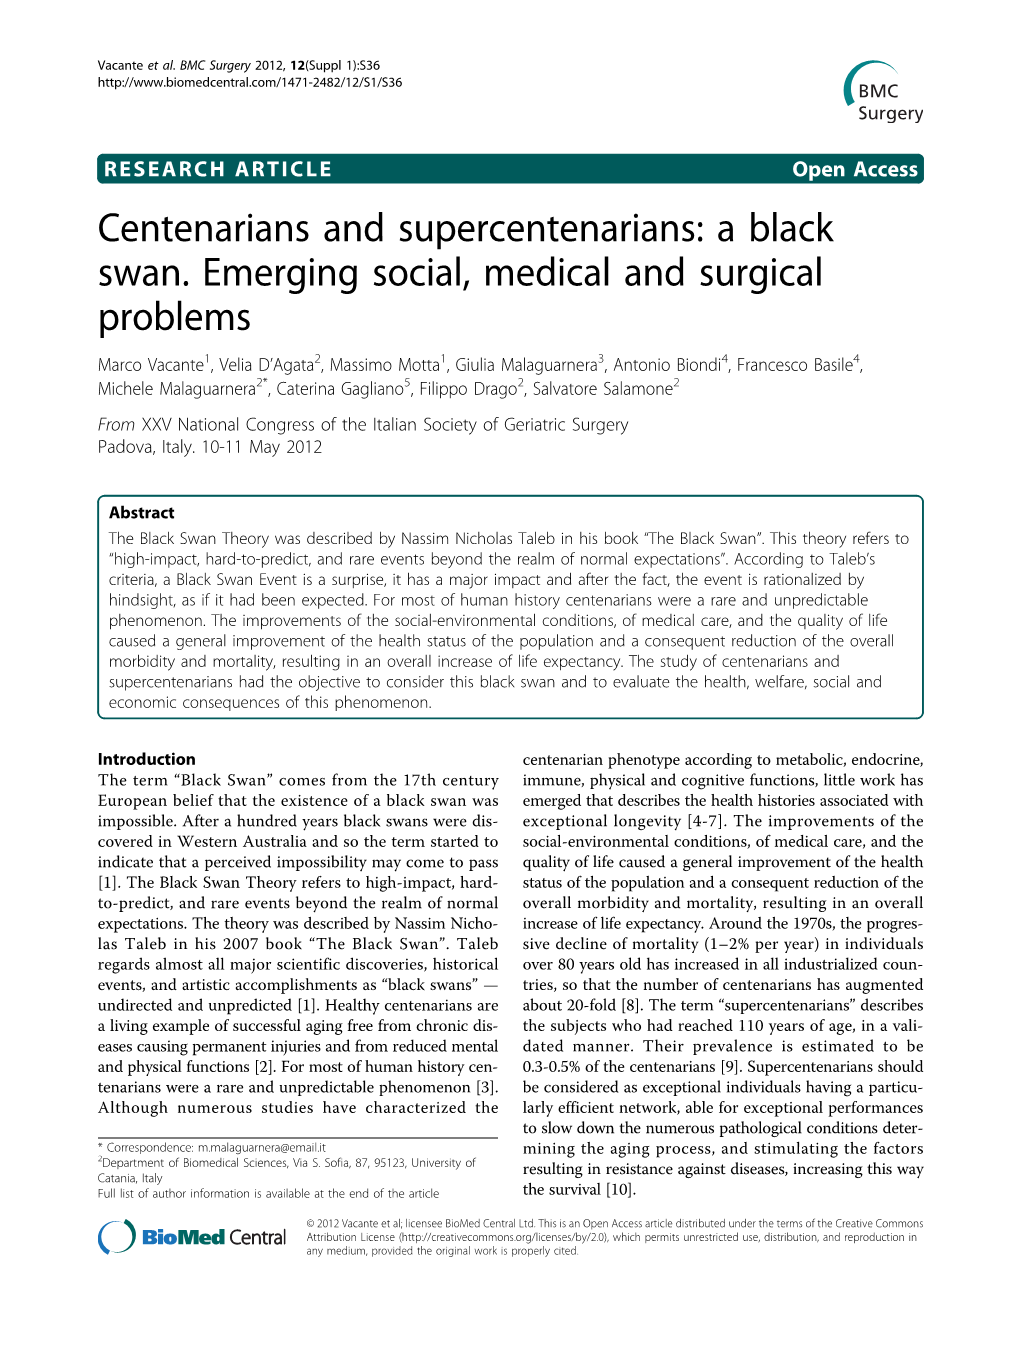 Centenarians and Supercentenarians: a Black Swan. Emerging Social